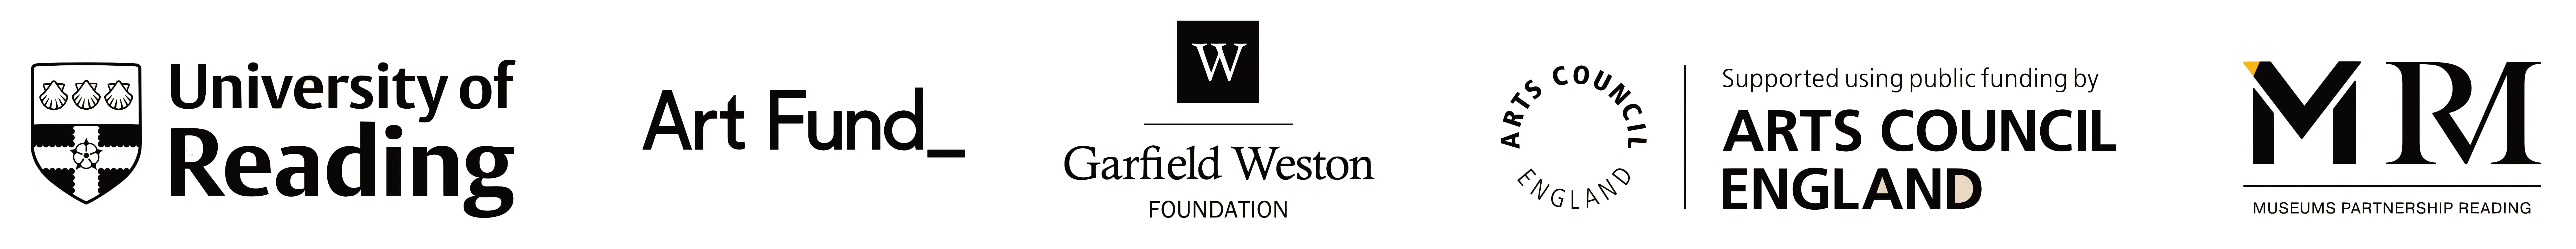 Five logos: University of Reading, Art Fund, Garfield Weston Foundation, Arts Council England Supported using public funding by Arts Council England, Museums Partnership Reading (MRM)